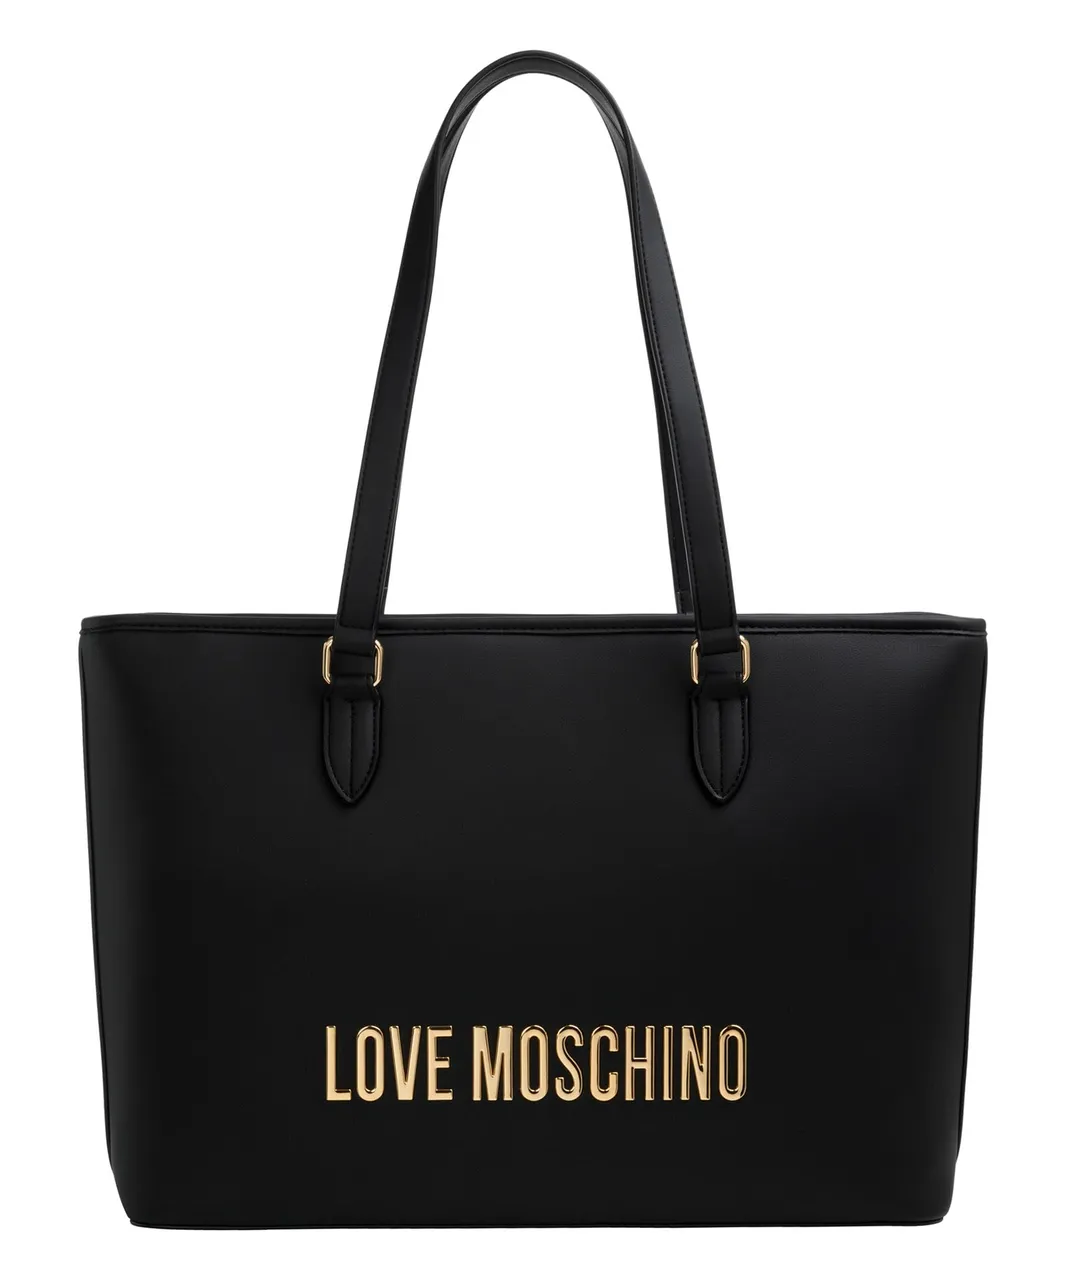 Love Moschino women tote bag black